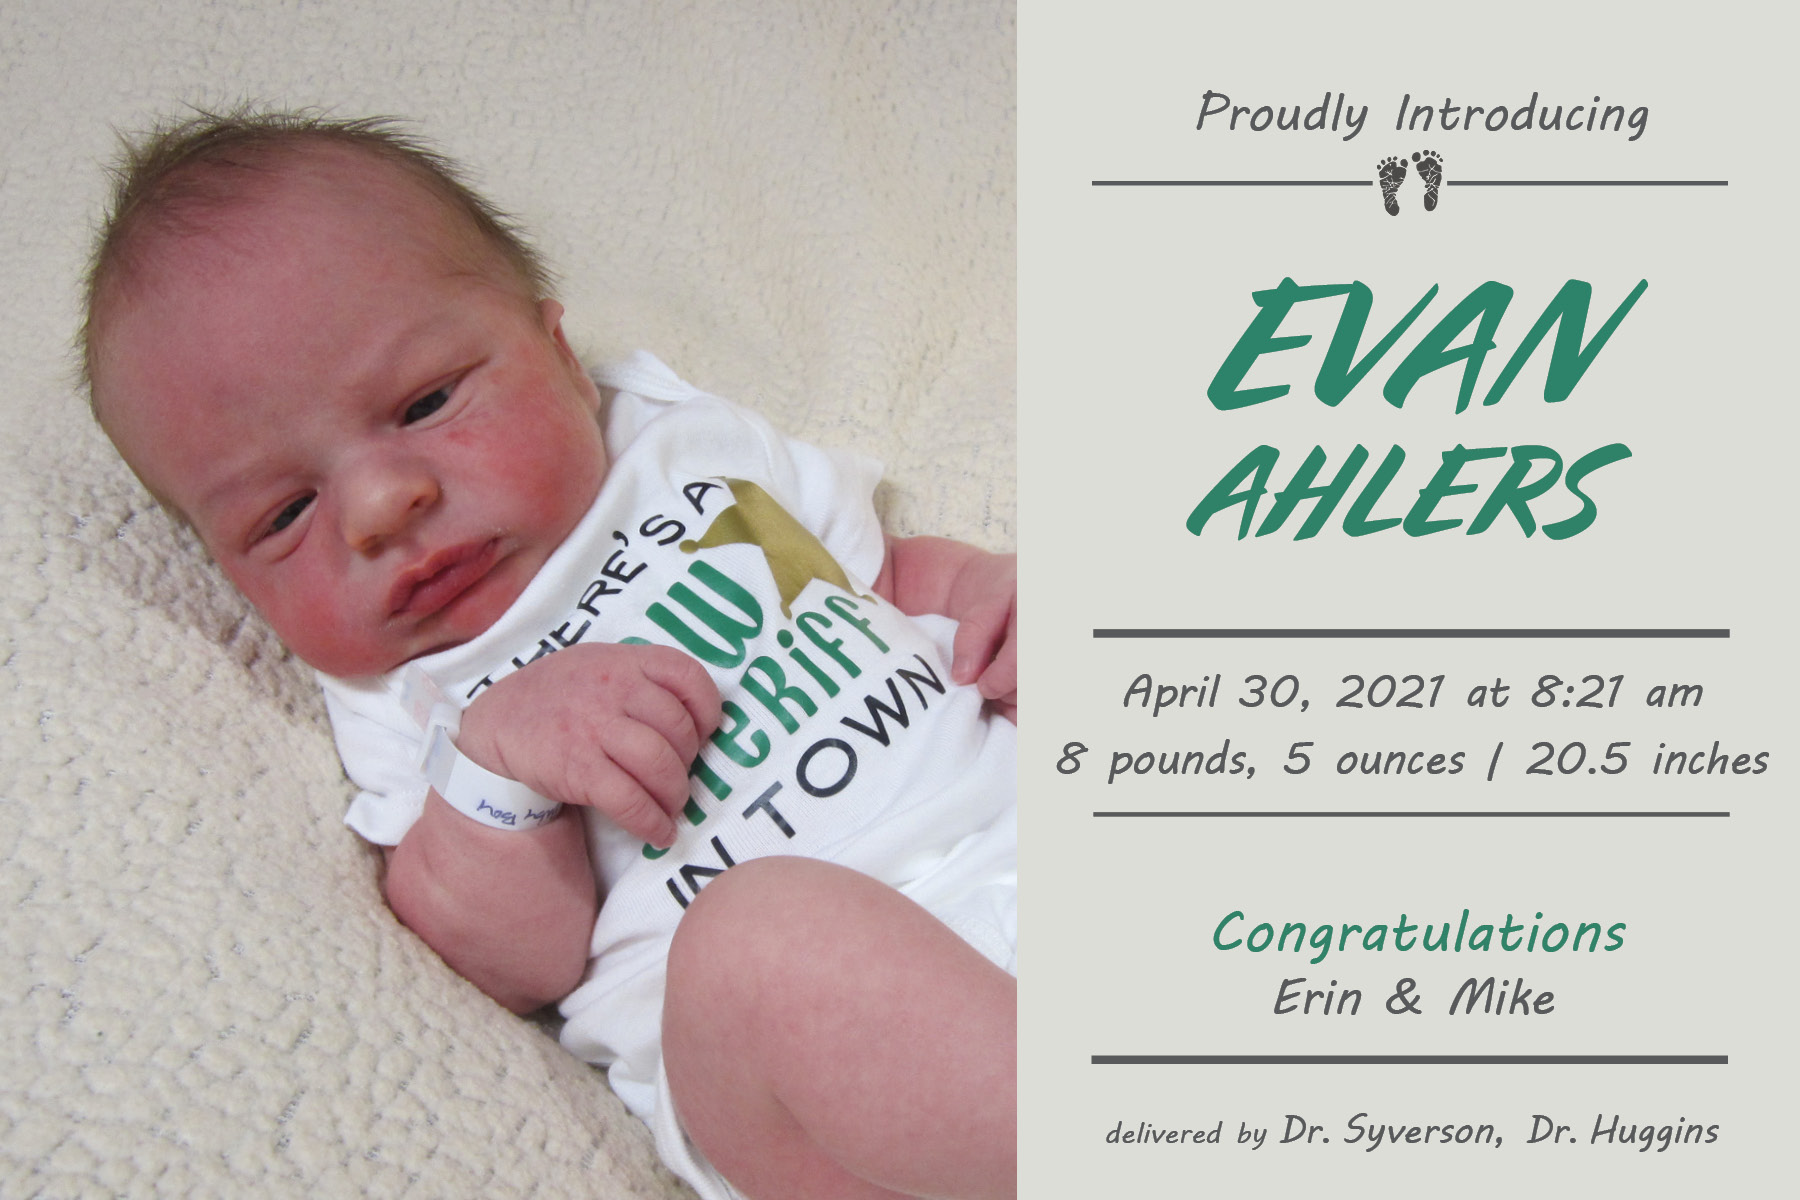 Evan Ahlers Birth Announcement